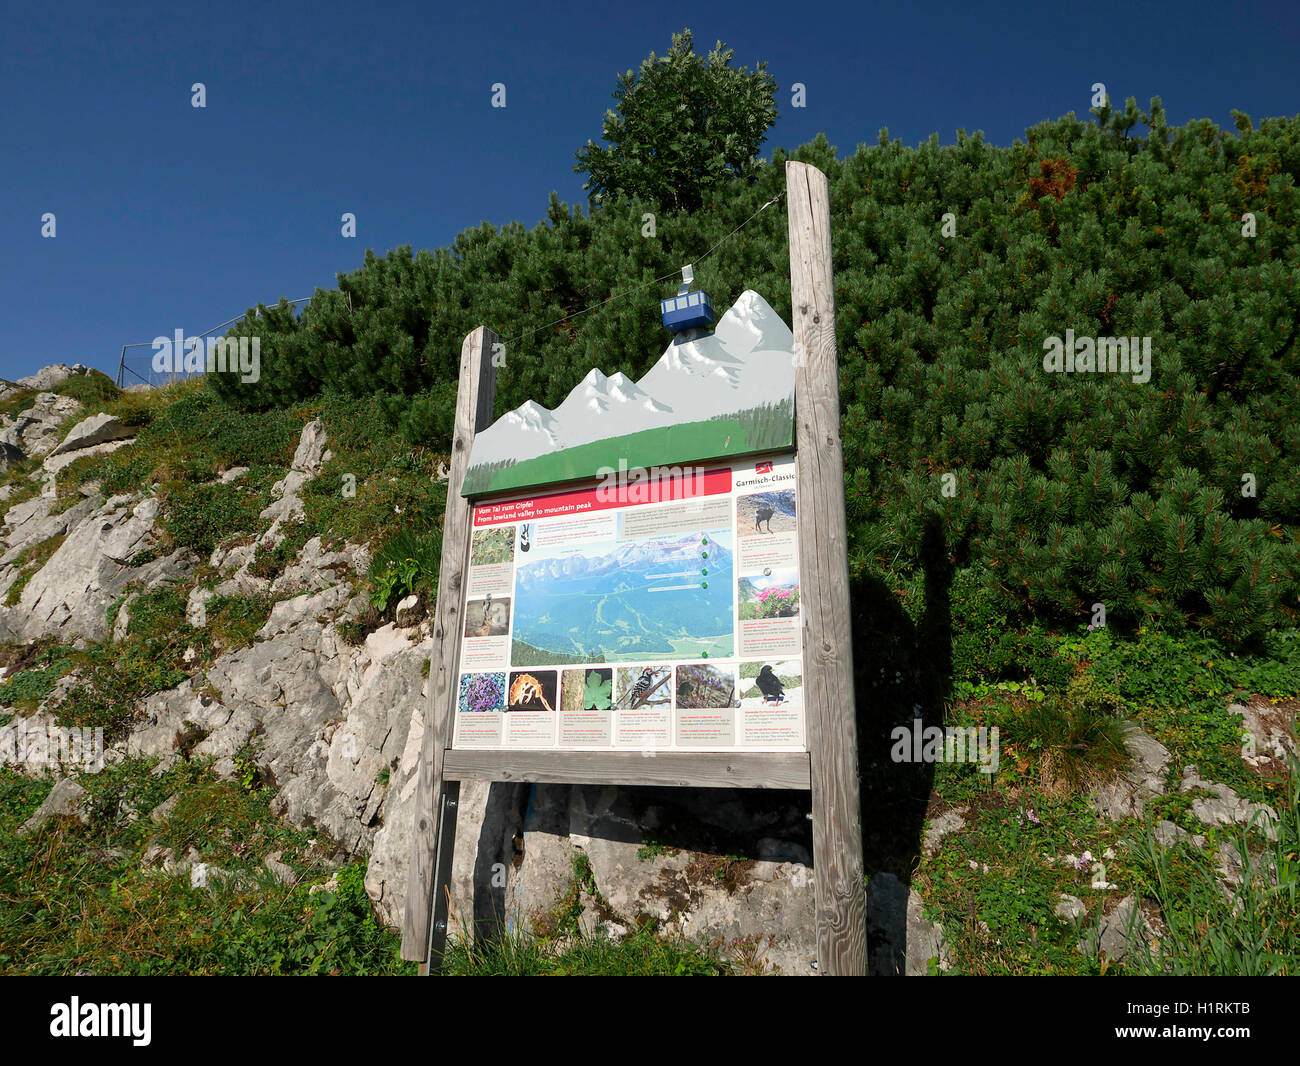 The Alps Germany Garmisch Partenkirchen Alpspitze Osterfelderkopf mountain landscape. Sign and maps information. Stock Photo